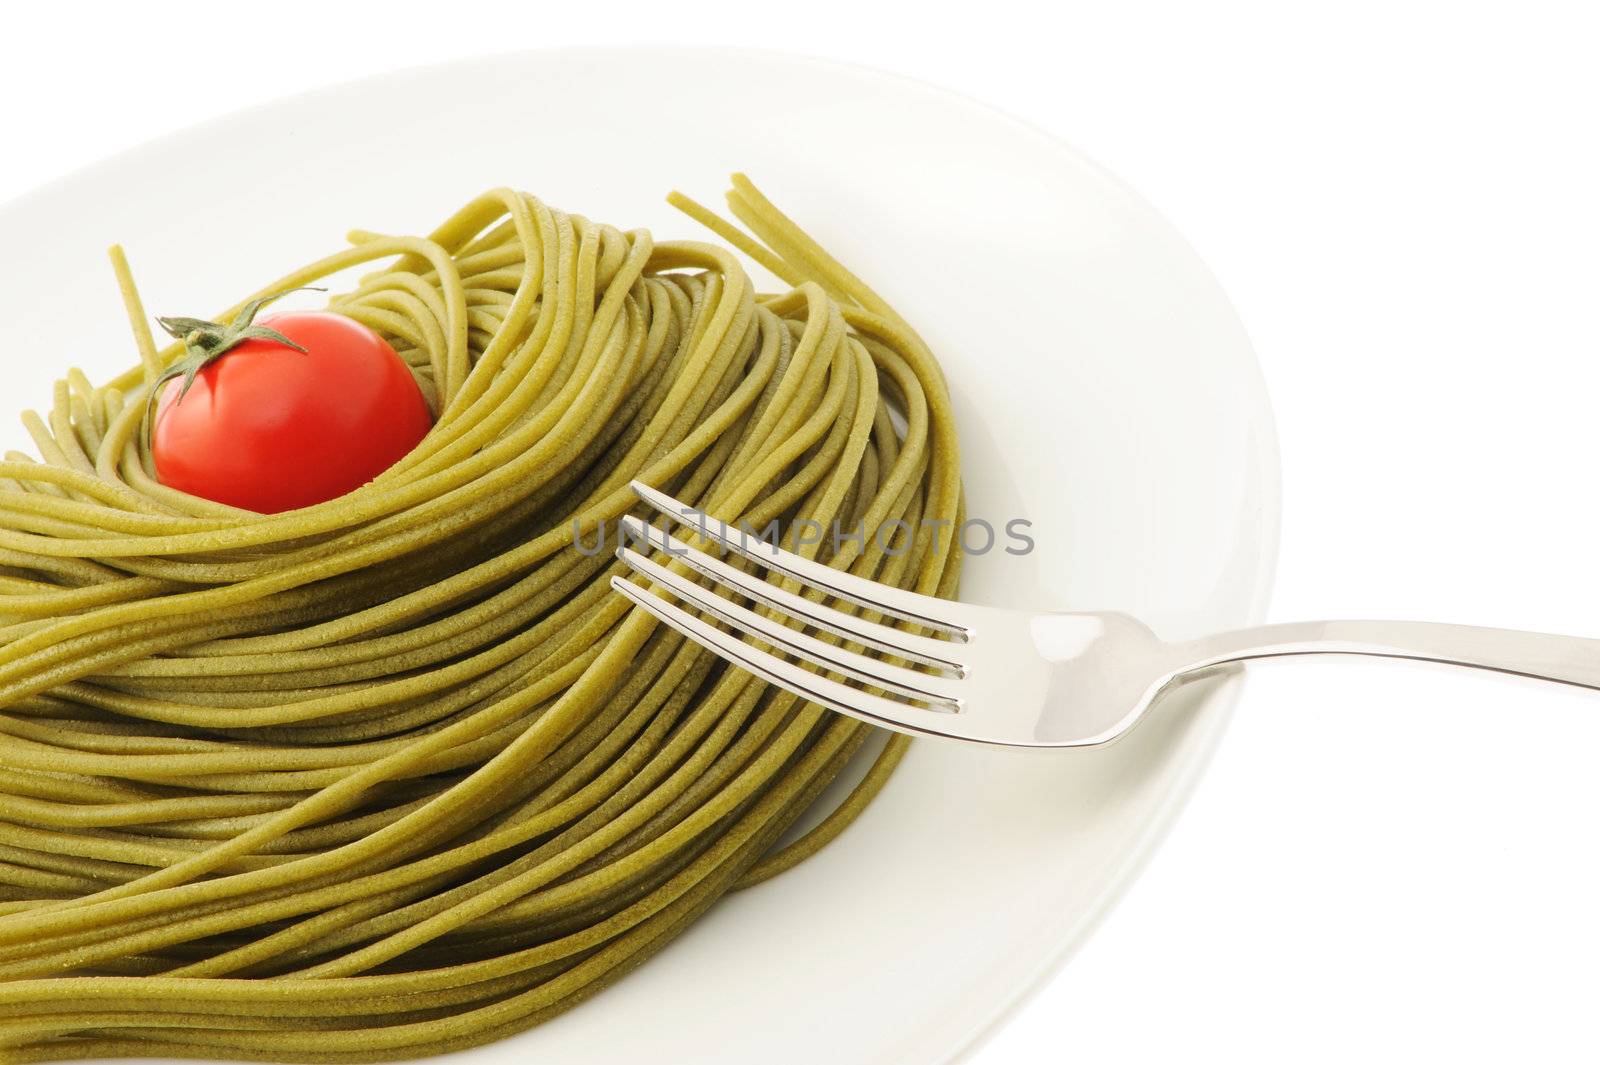 Italian pasta dish, food photo by stokkete